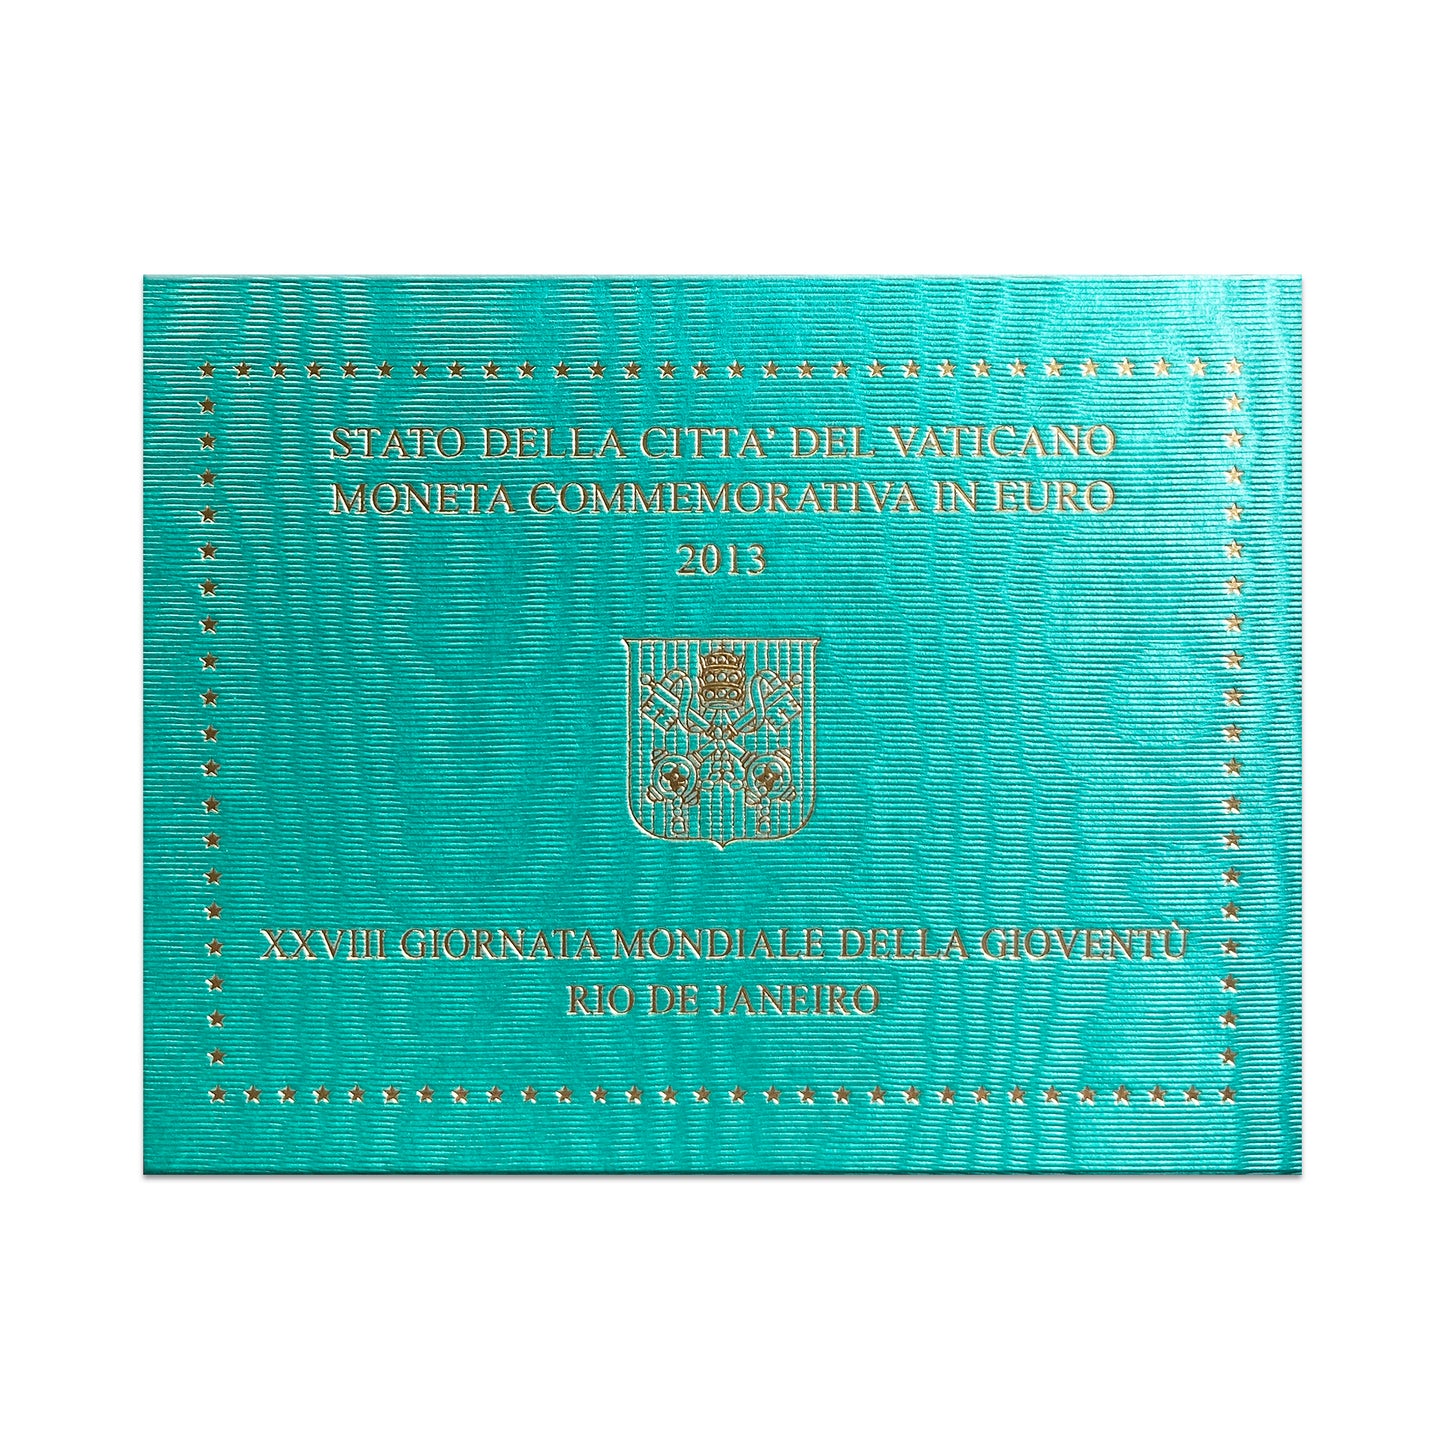 Vaticano - Moneda 2 euros conmemorativa 2013 -XXVIII JMJ Río 2013